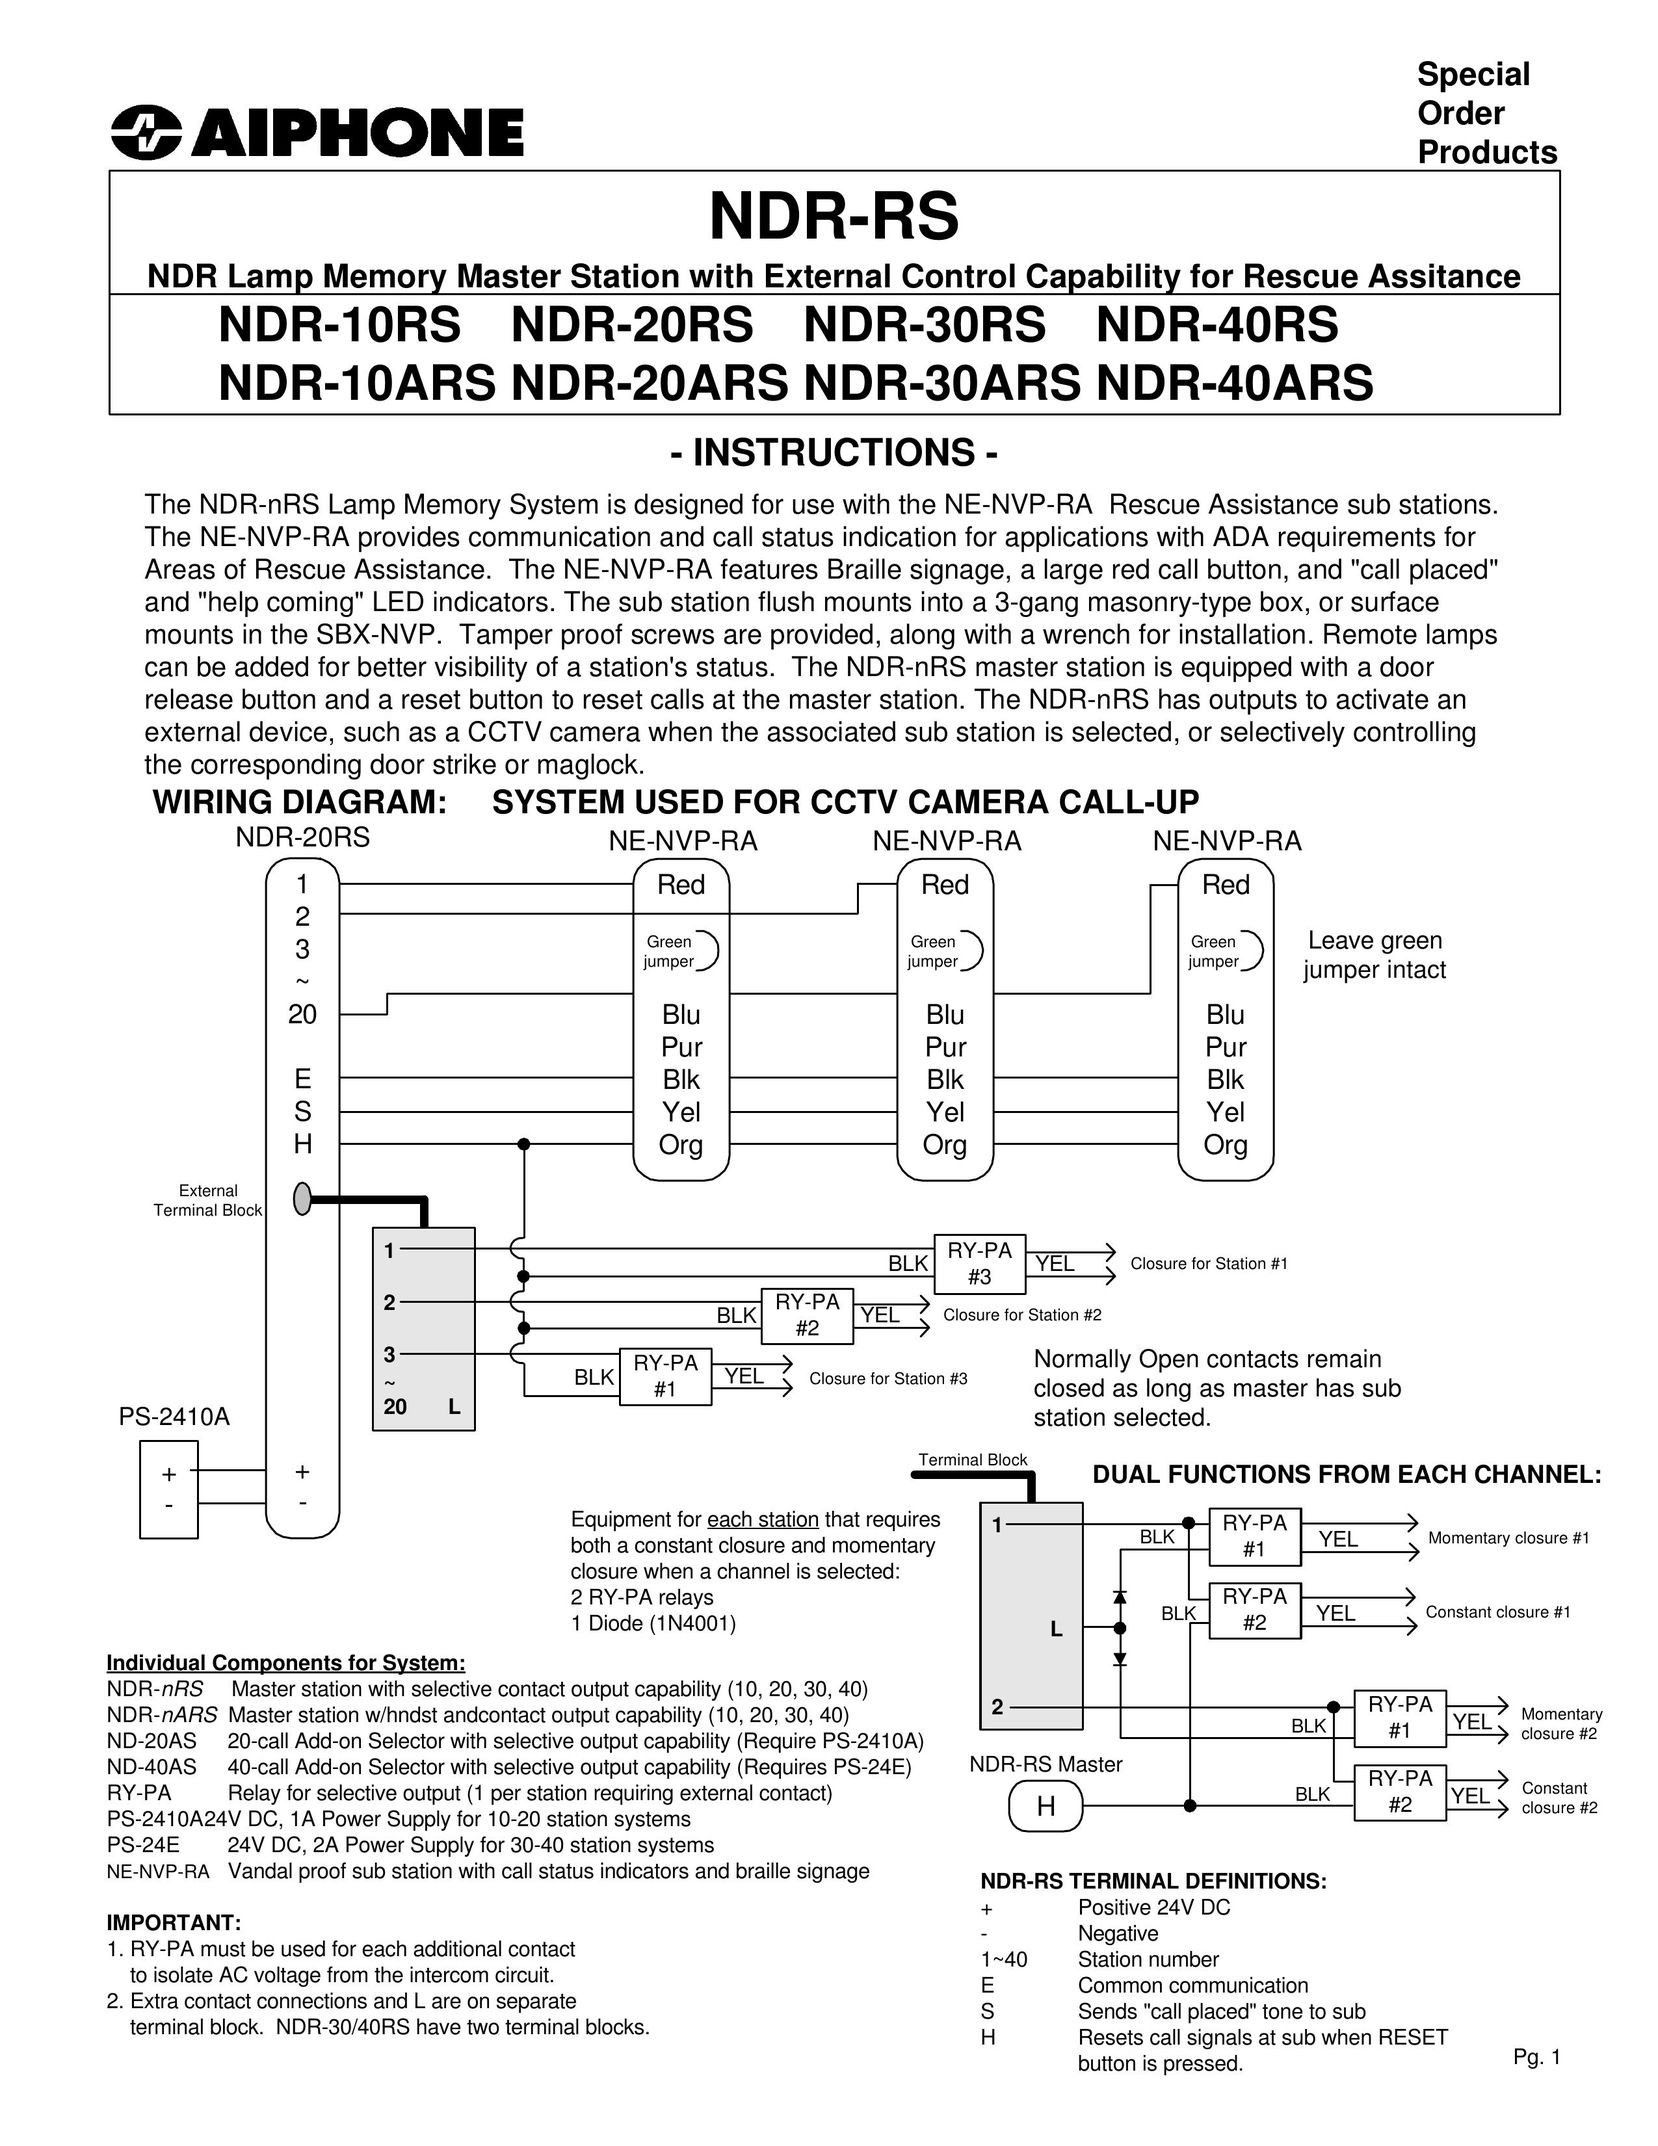 Aiphone NDR-20RS Telephone User Manual